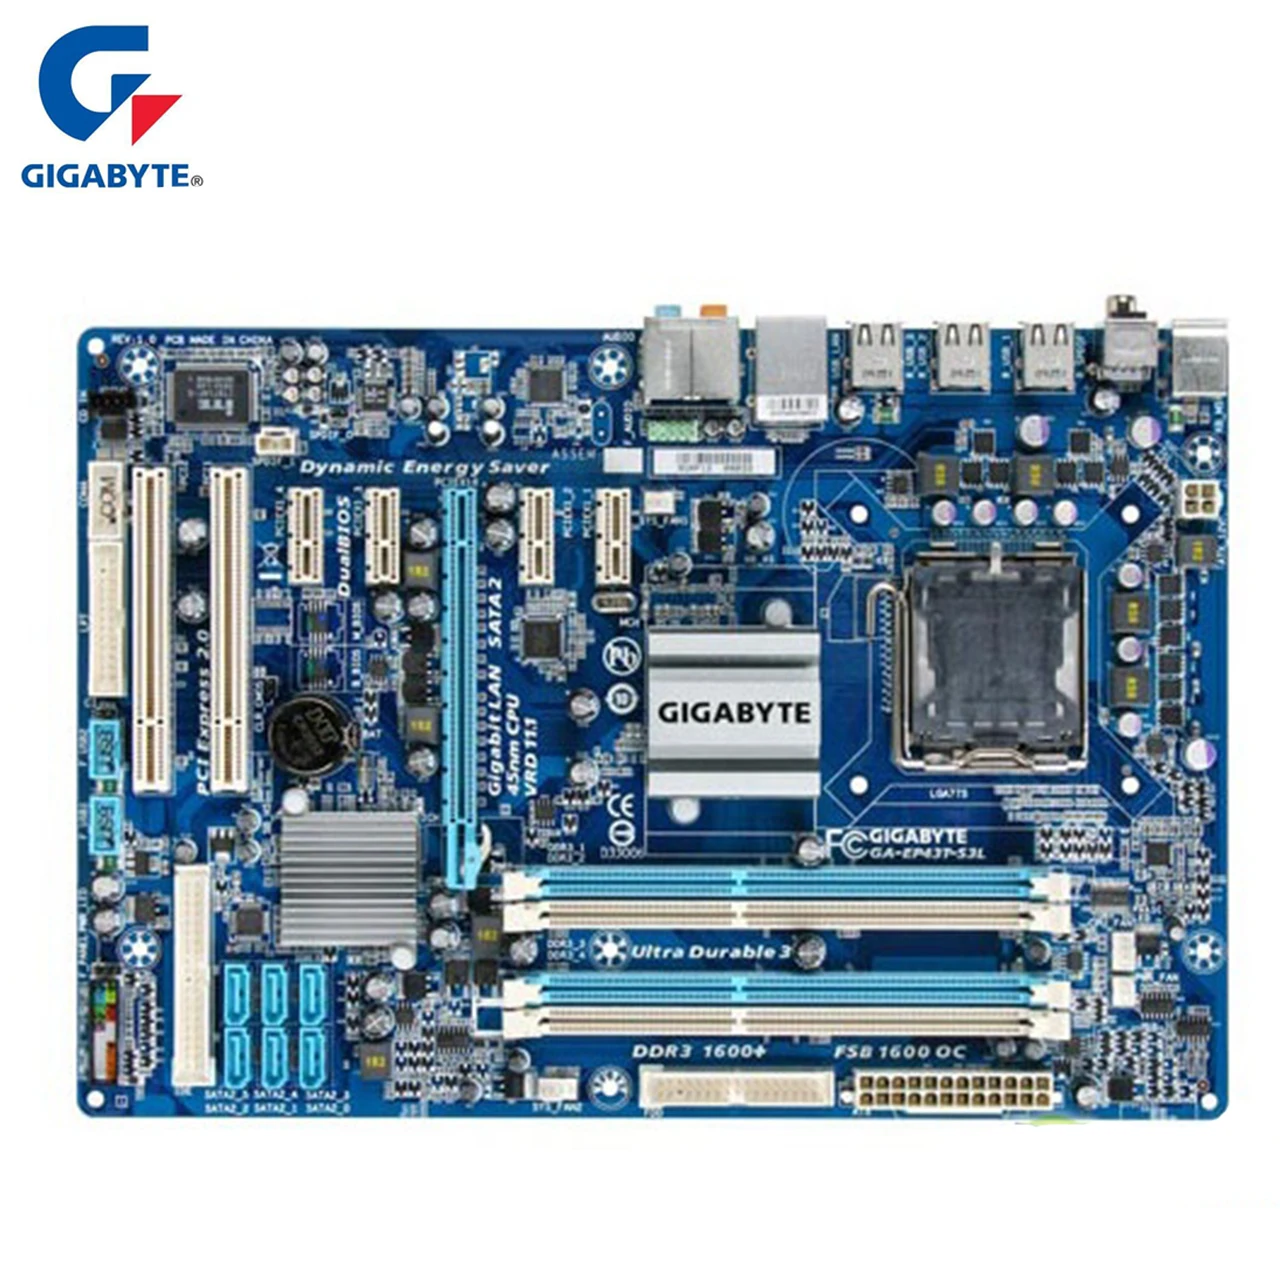 Gigabyte GA-EP43T-S3L Motherboard LGA 775 DDR3 USB2.0 16GB For Intel P43 EP43T-S3L Desktop Mainboard SATA II Systemboard Used